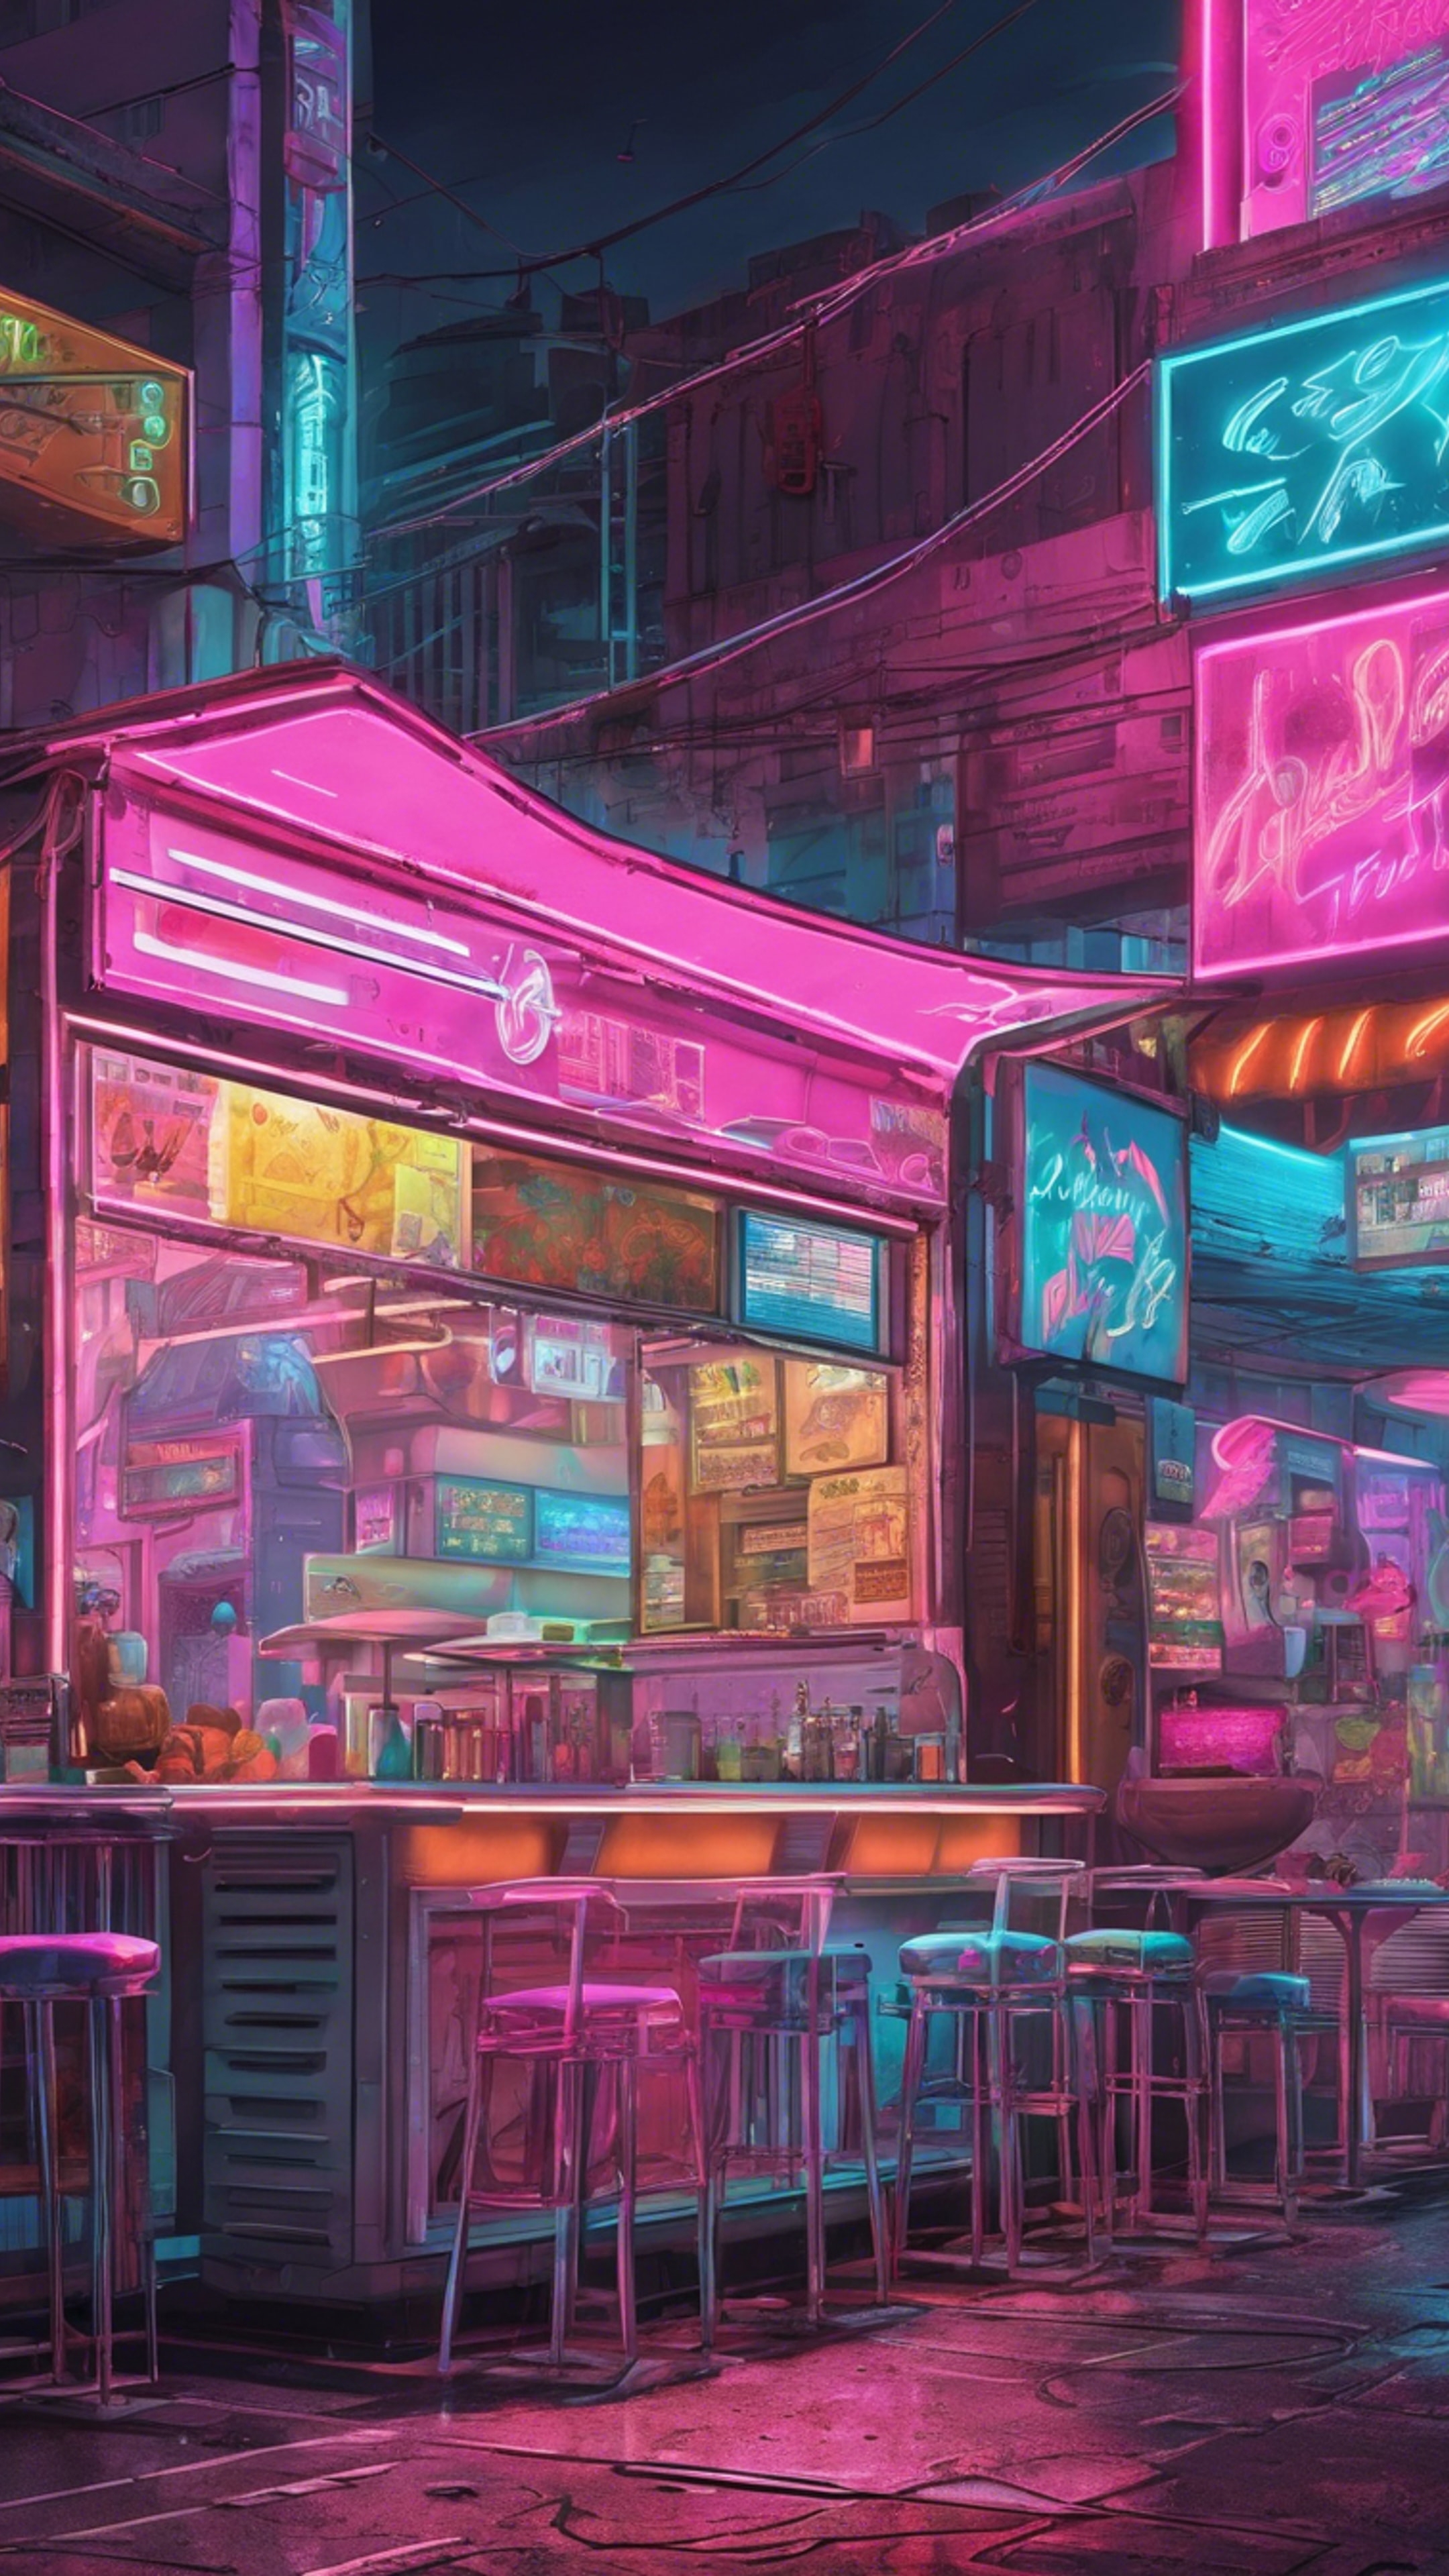 Night scene in a city where cyberpunk meets pastel at a popular street food stall. Behang[607f993b19214cf28e30]